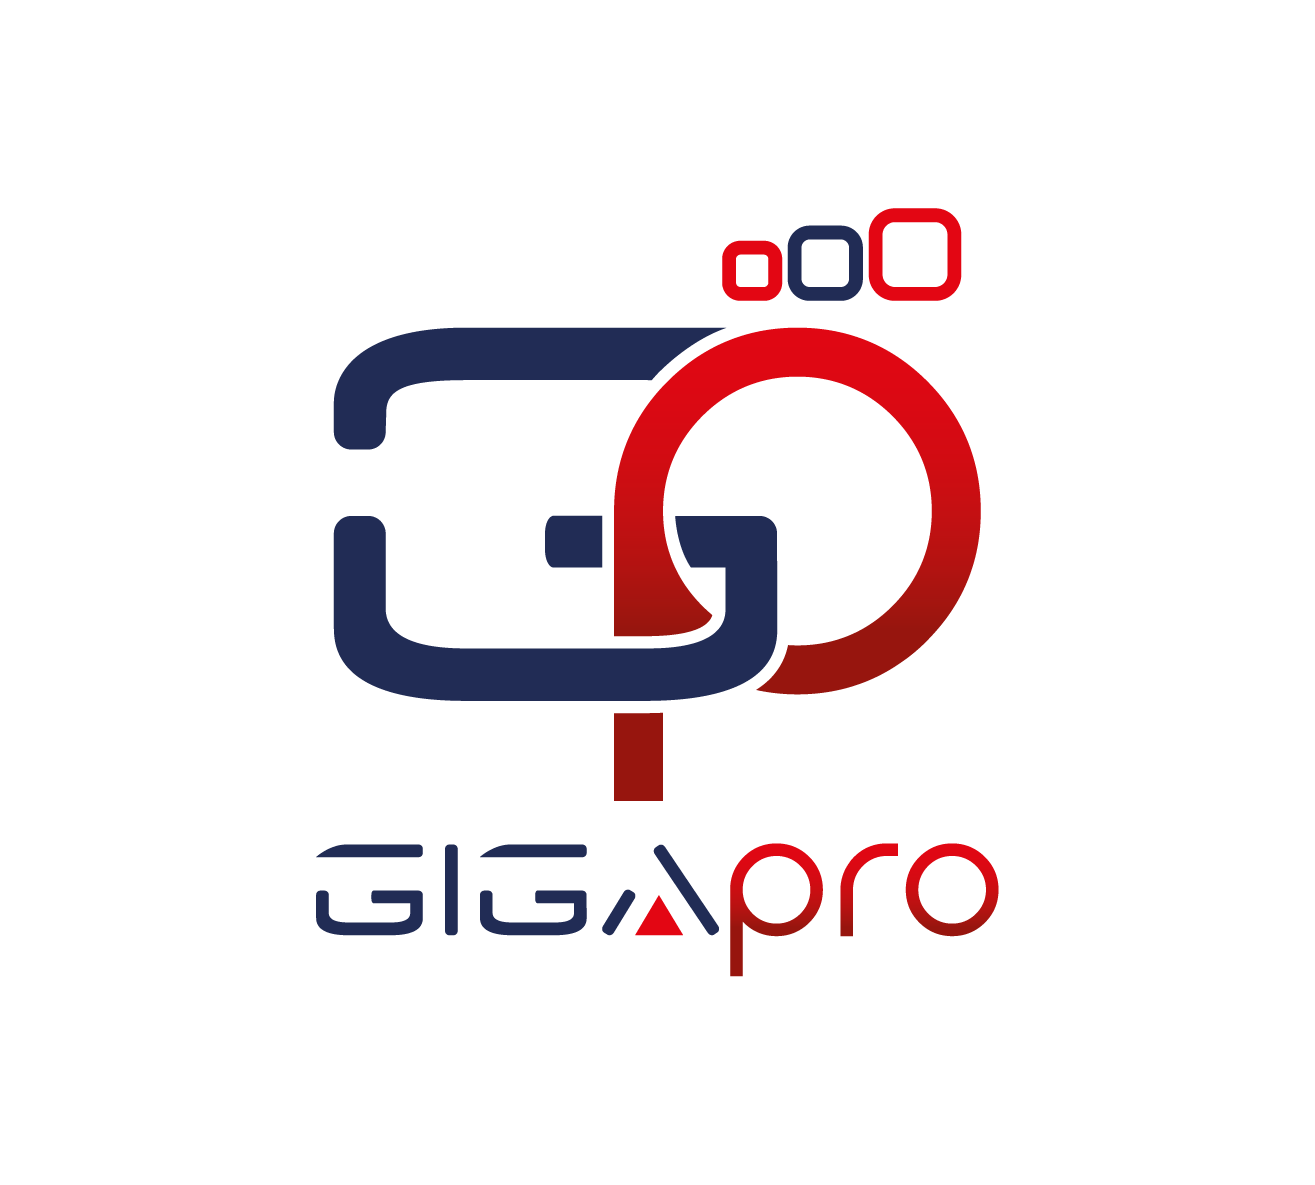 Giga Pro